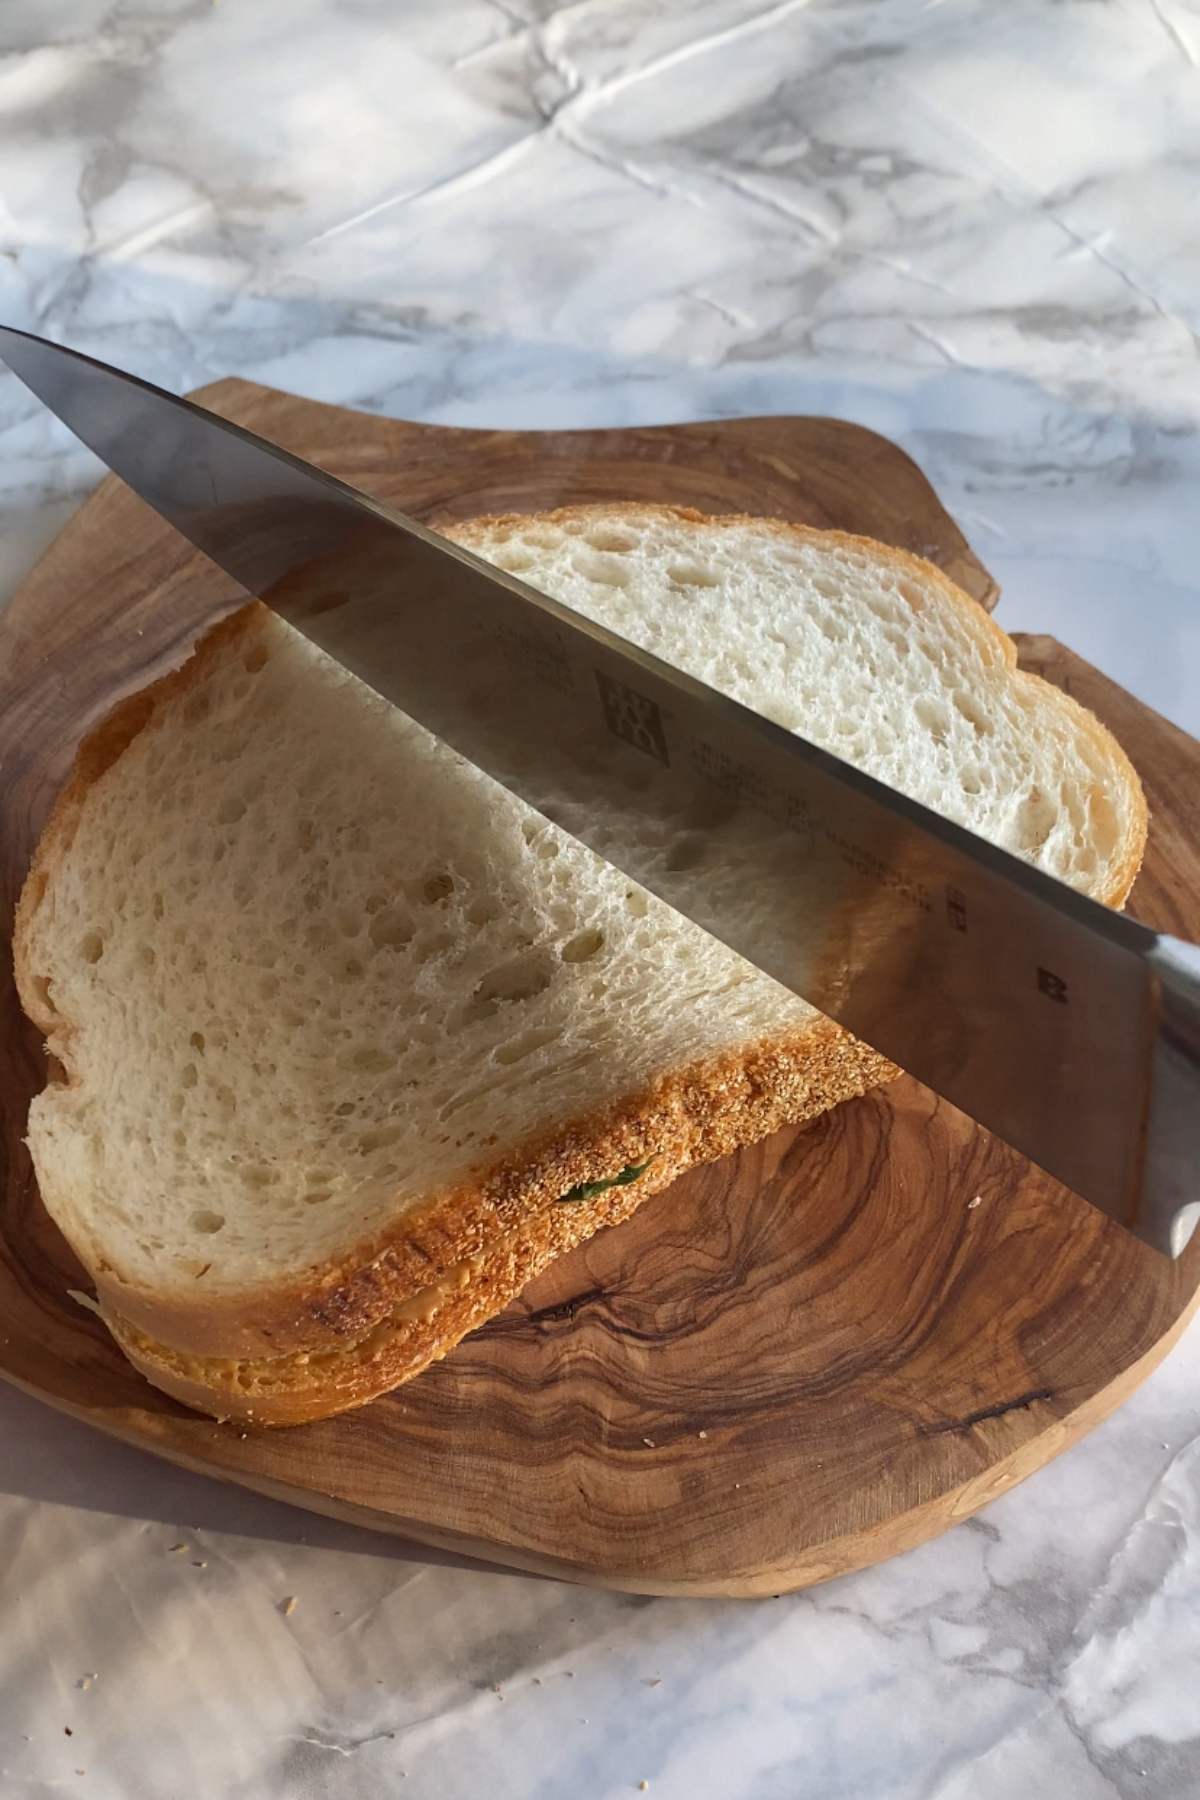 Slicing sandwich in half.